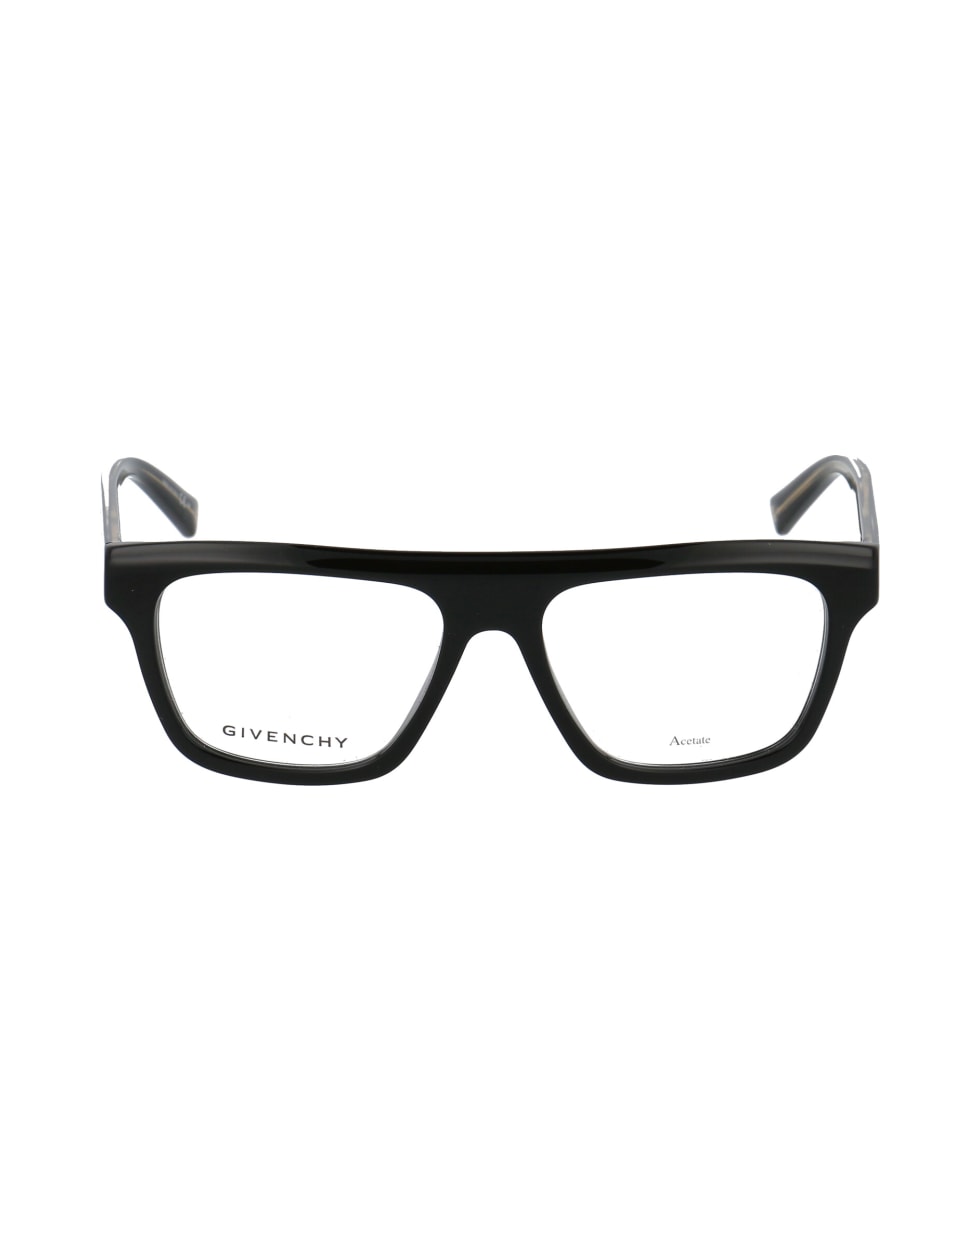 Givenchy Eyewear Gv 0136 Glasses - 807 BLACK